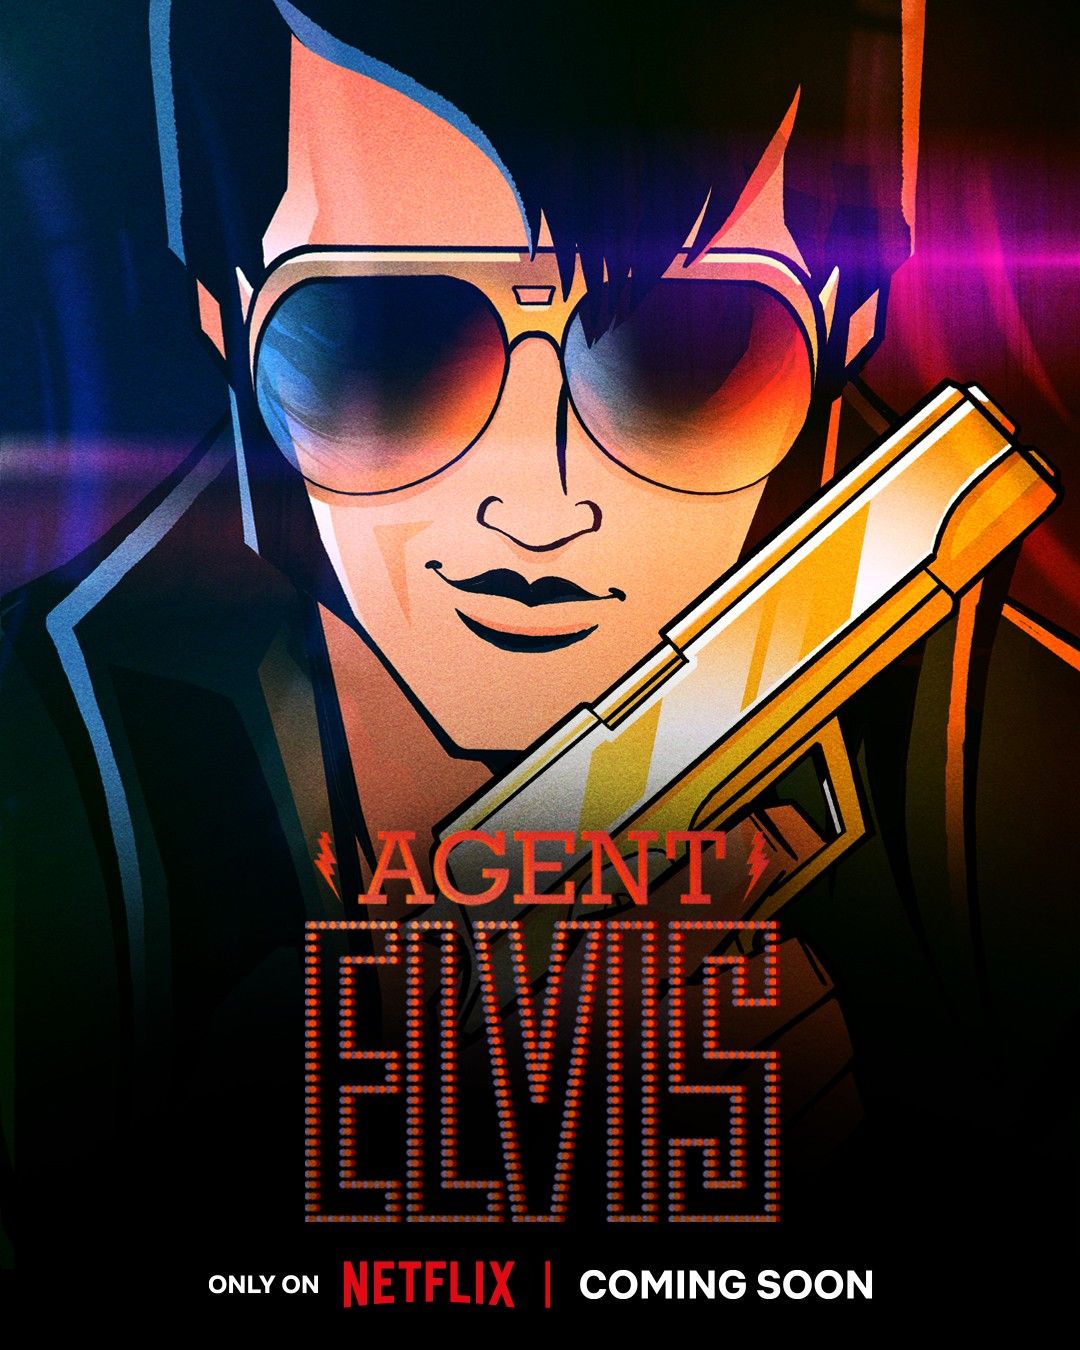 Agent Elvis Netflix show poster